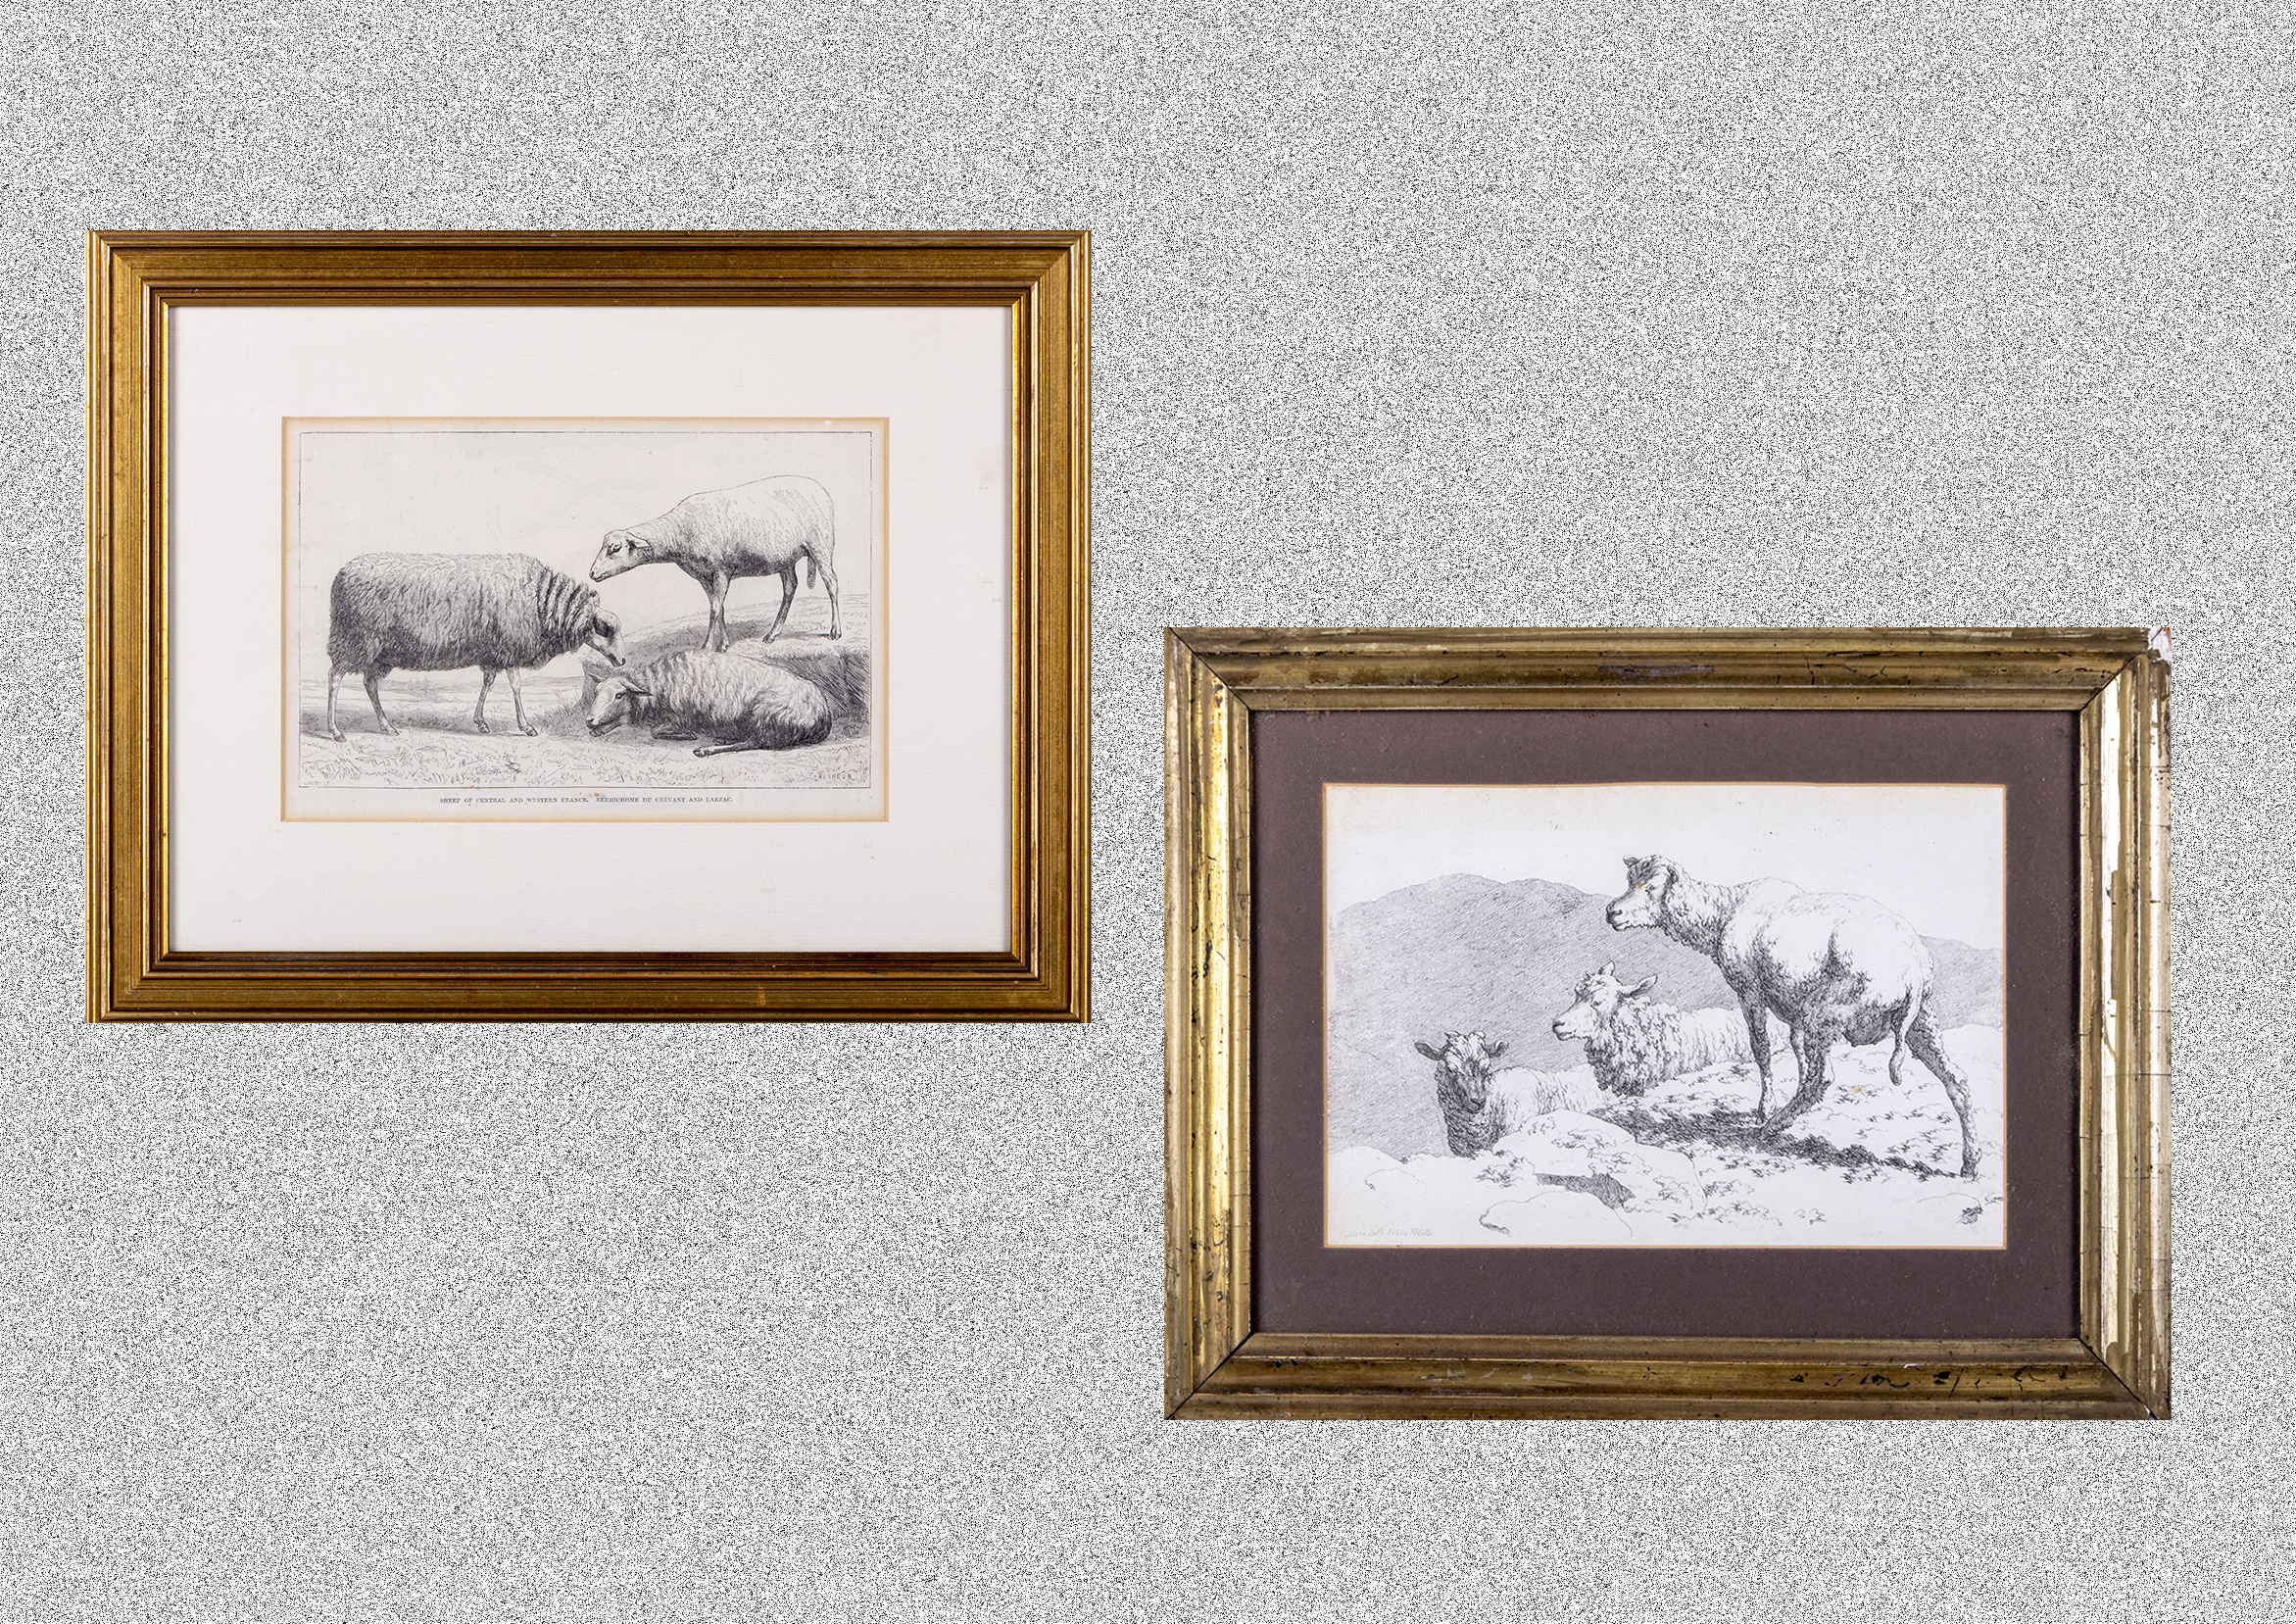 Two gilt framed engravings depicting sheep